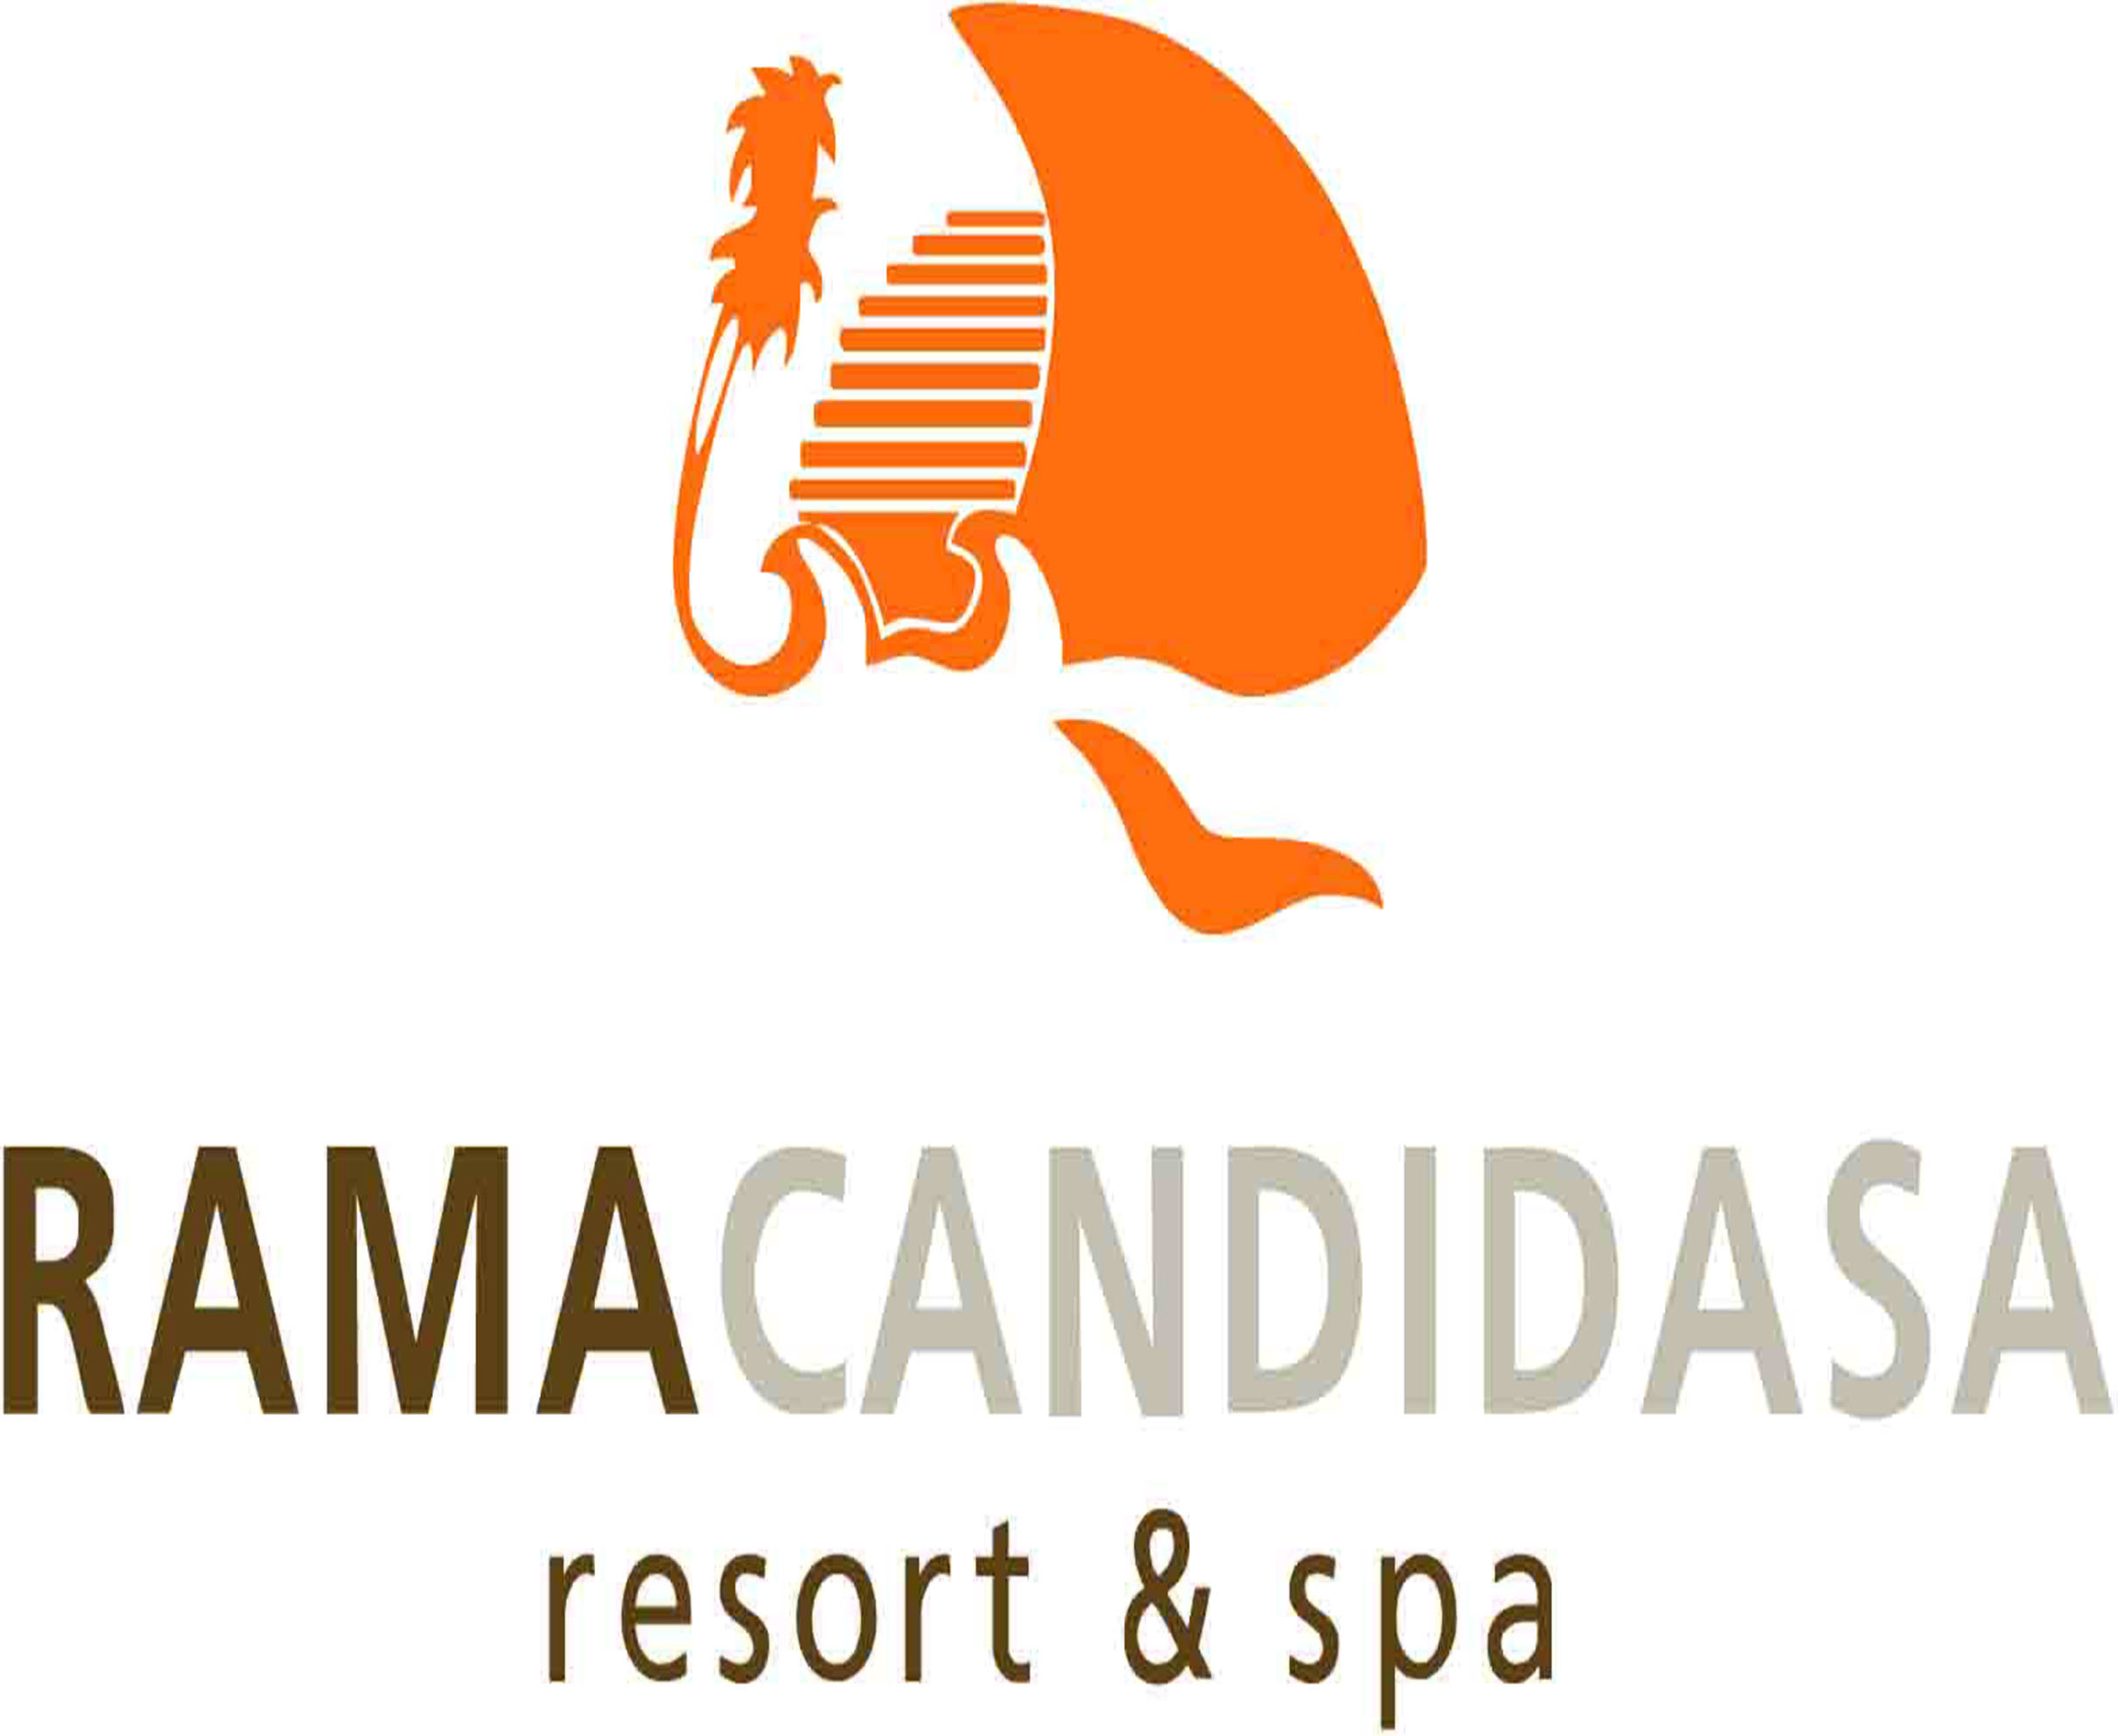 
Rama Candidasa Resort